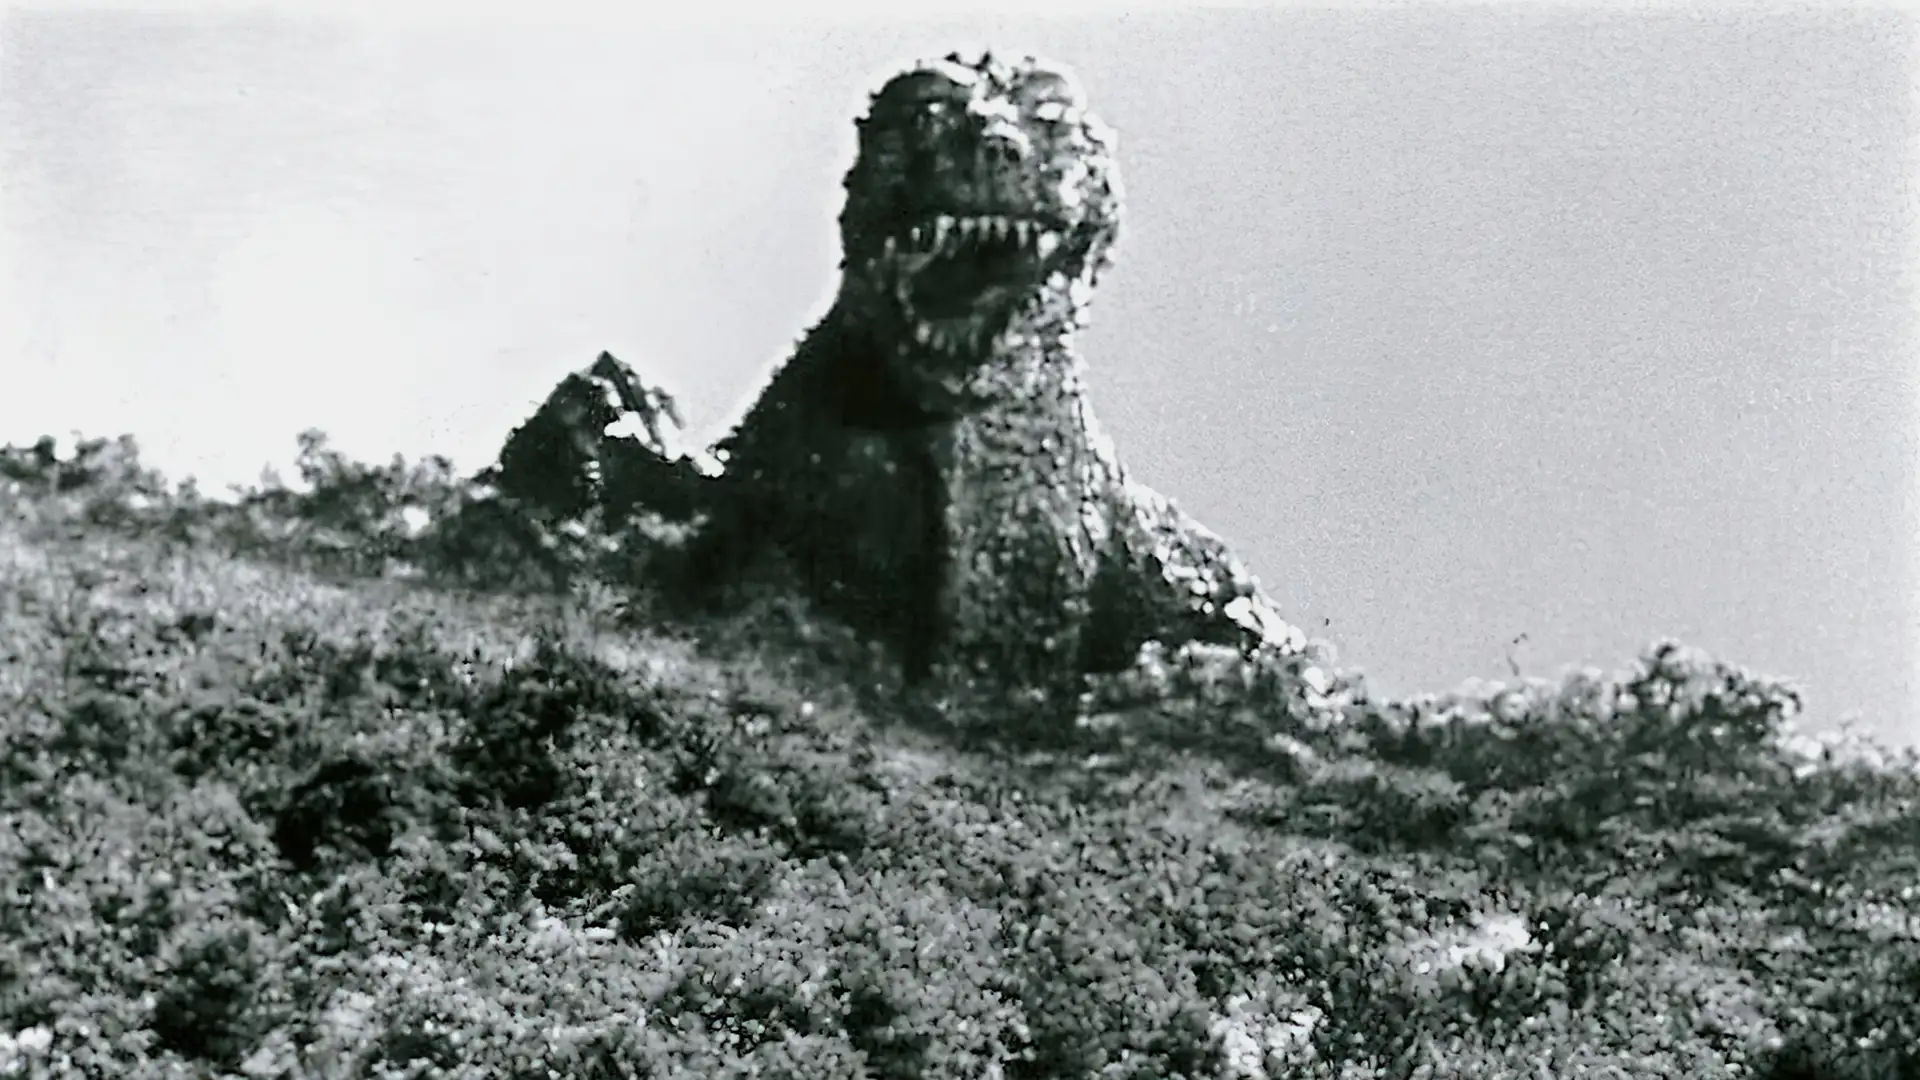 Godzilla's appearance on Odo Island